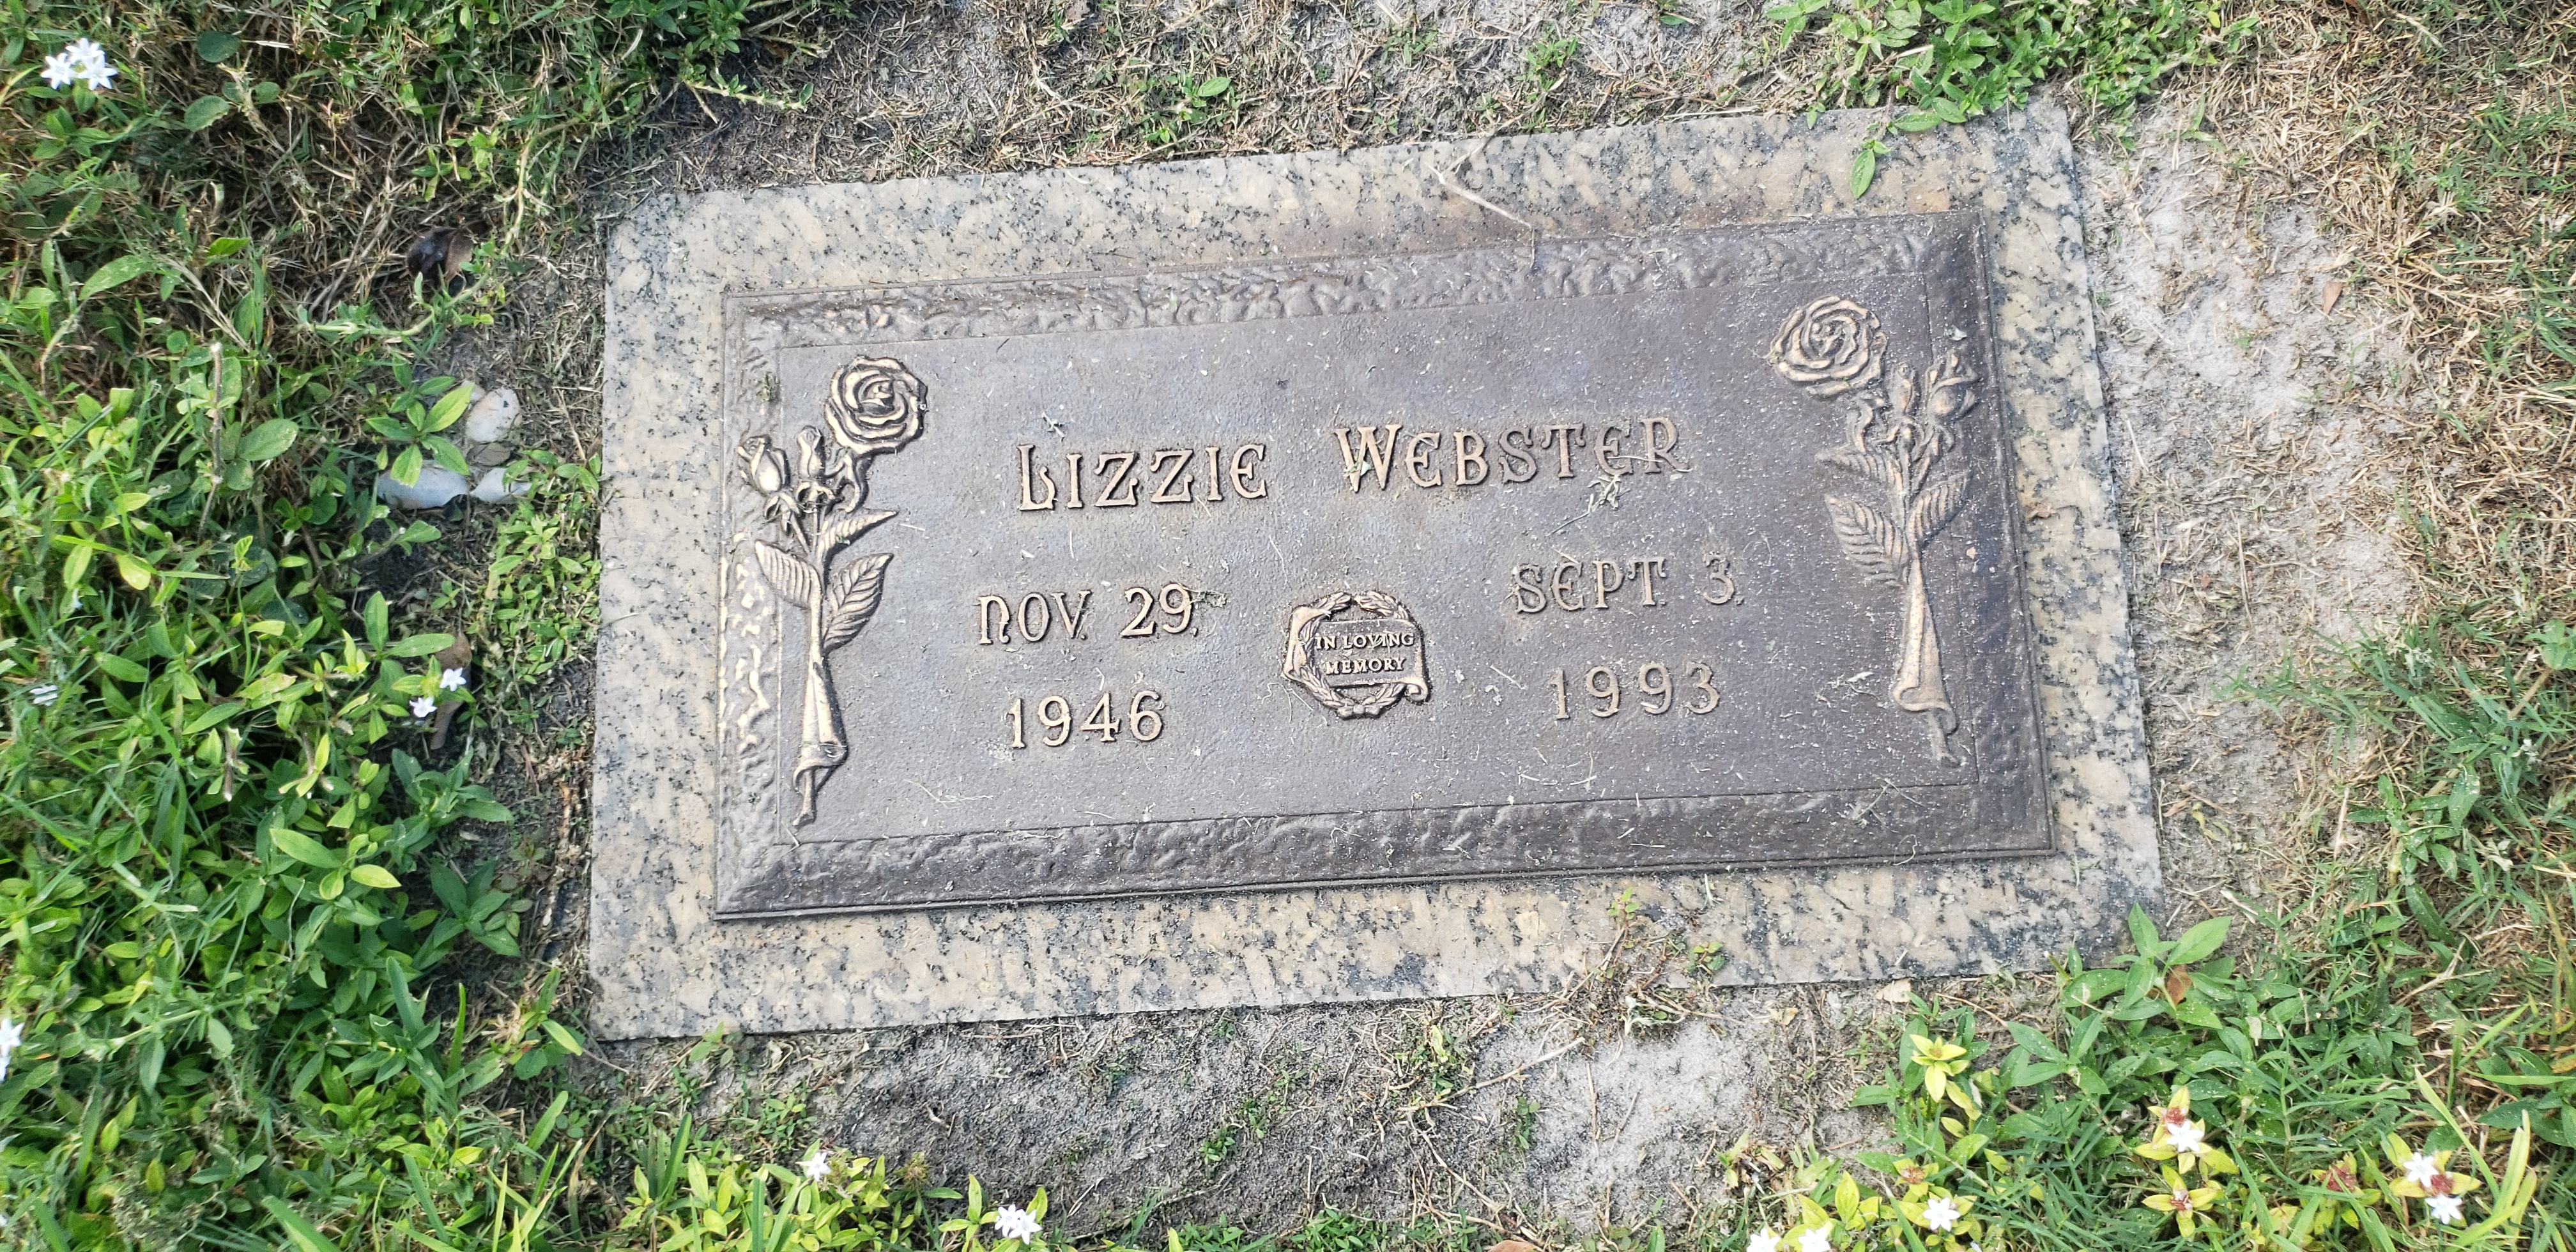 Lizzie Webster